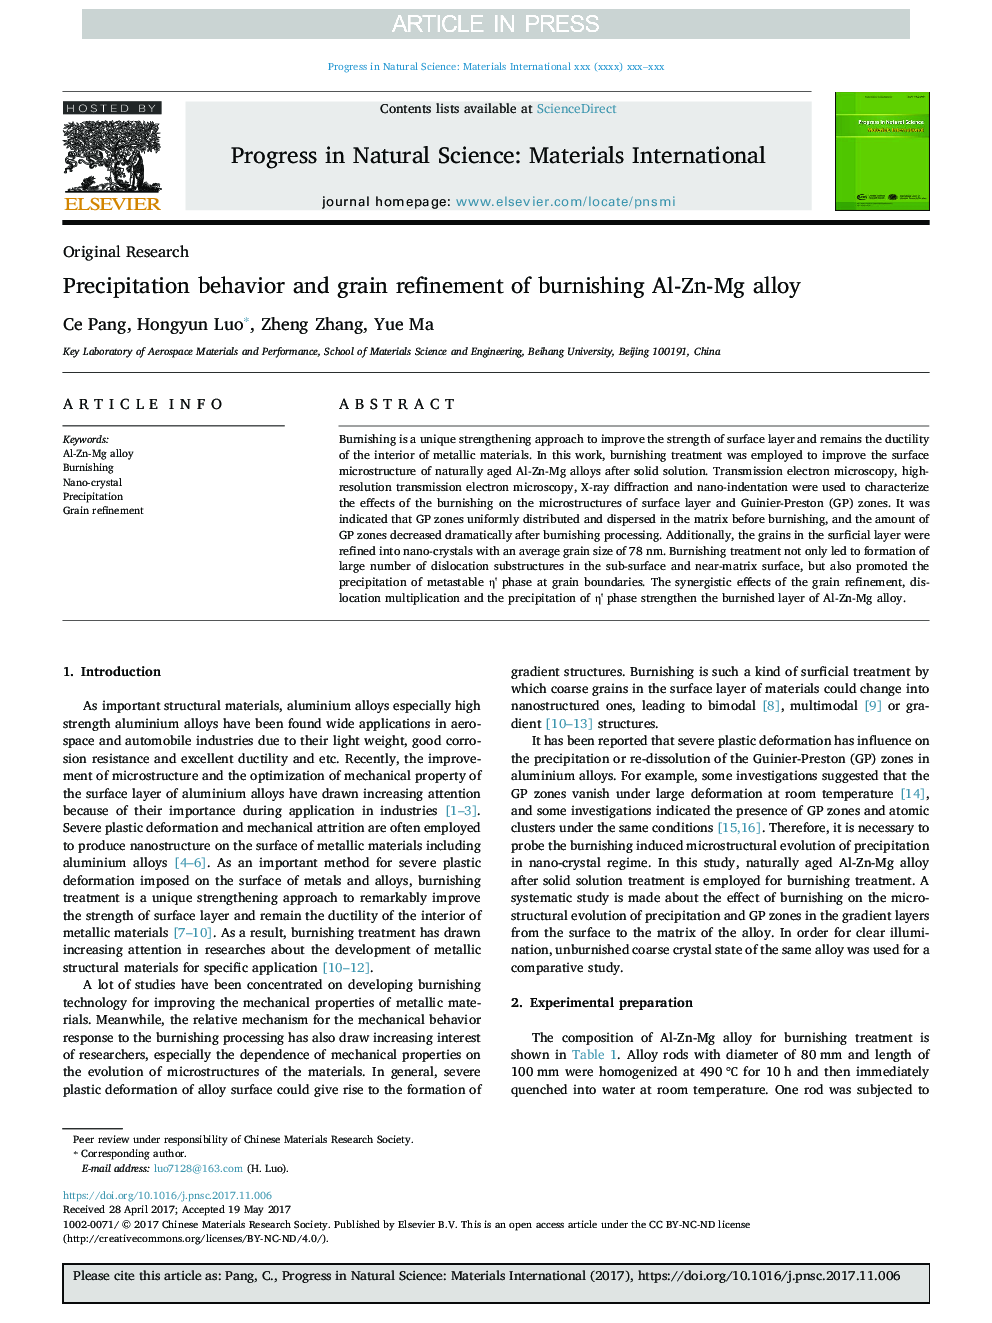 Precipitation behavior and grain refinement of burnishing Al-Zn-Mg alloy